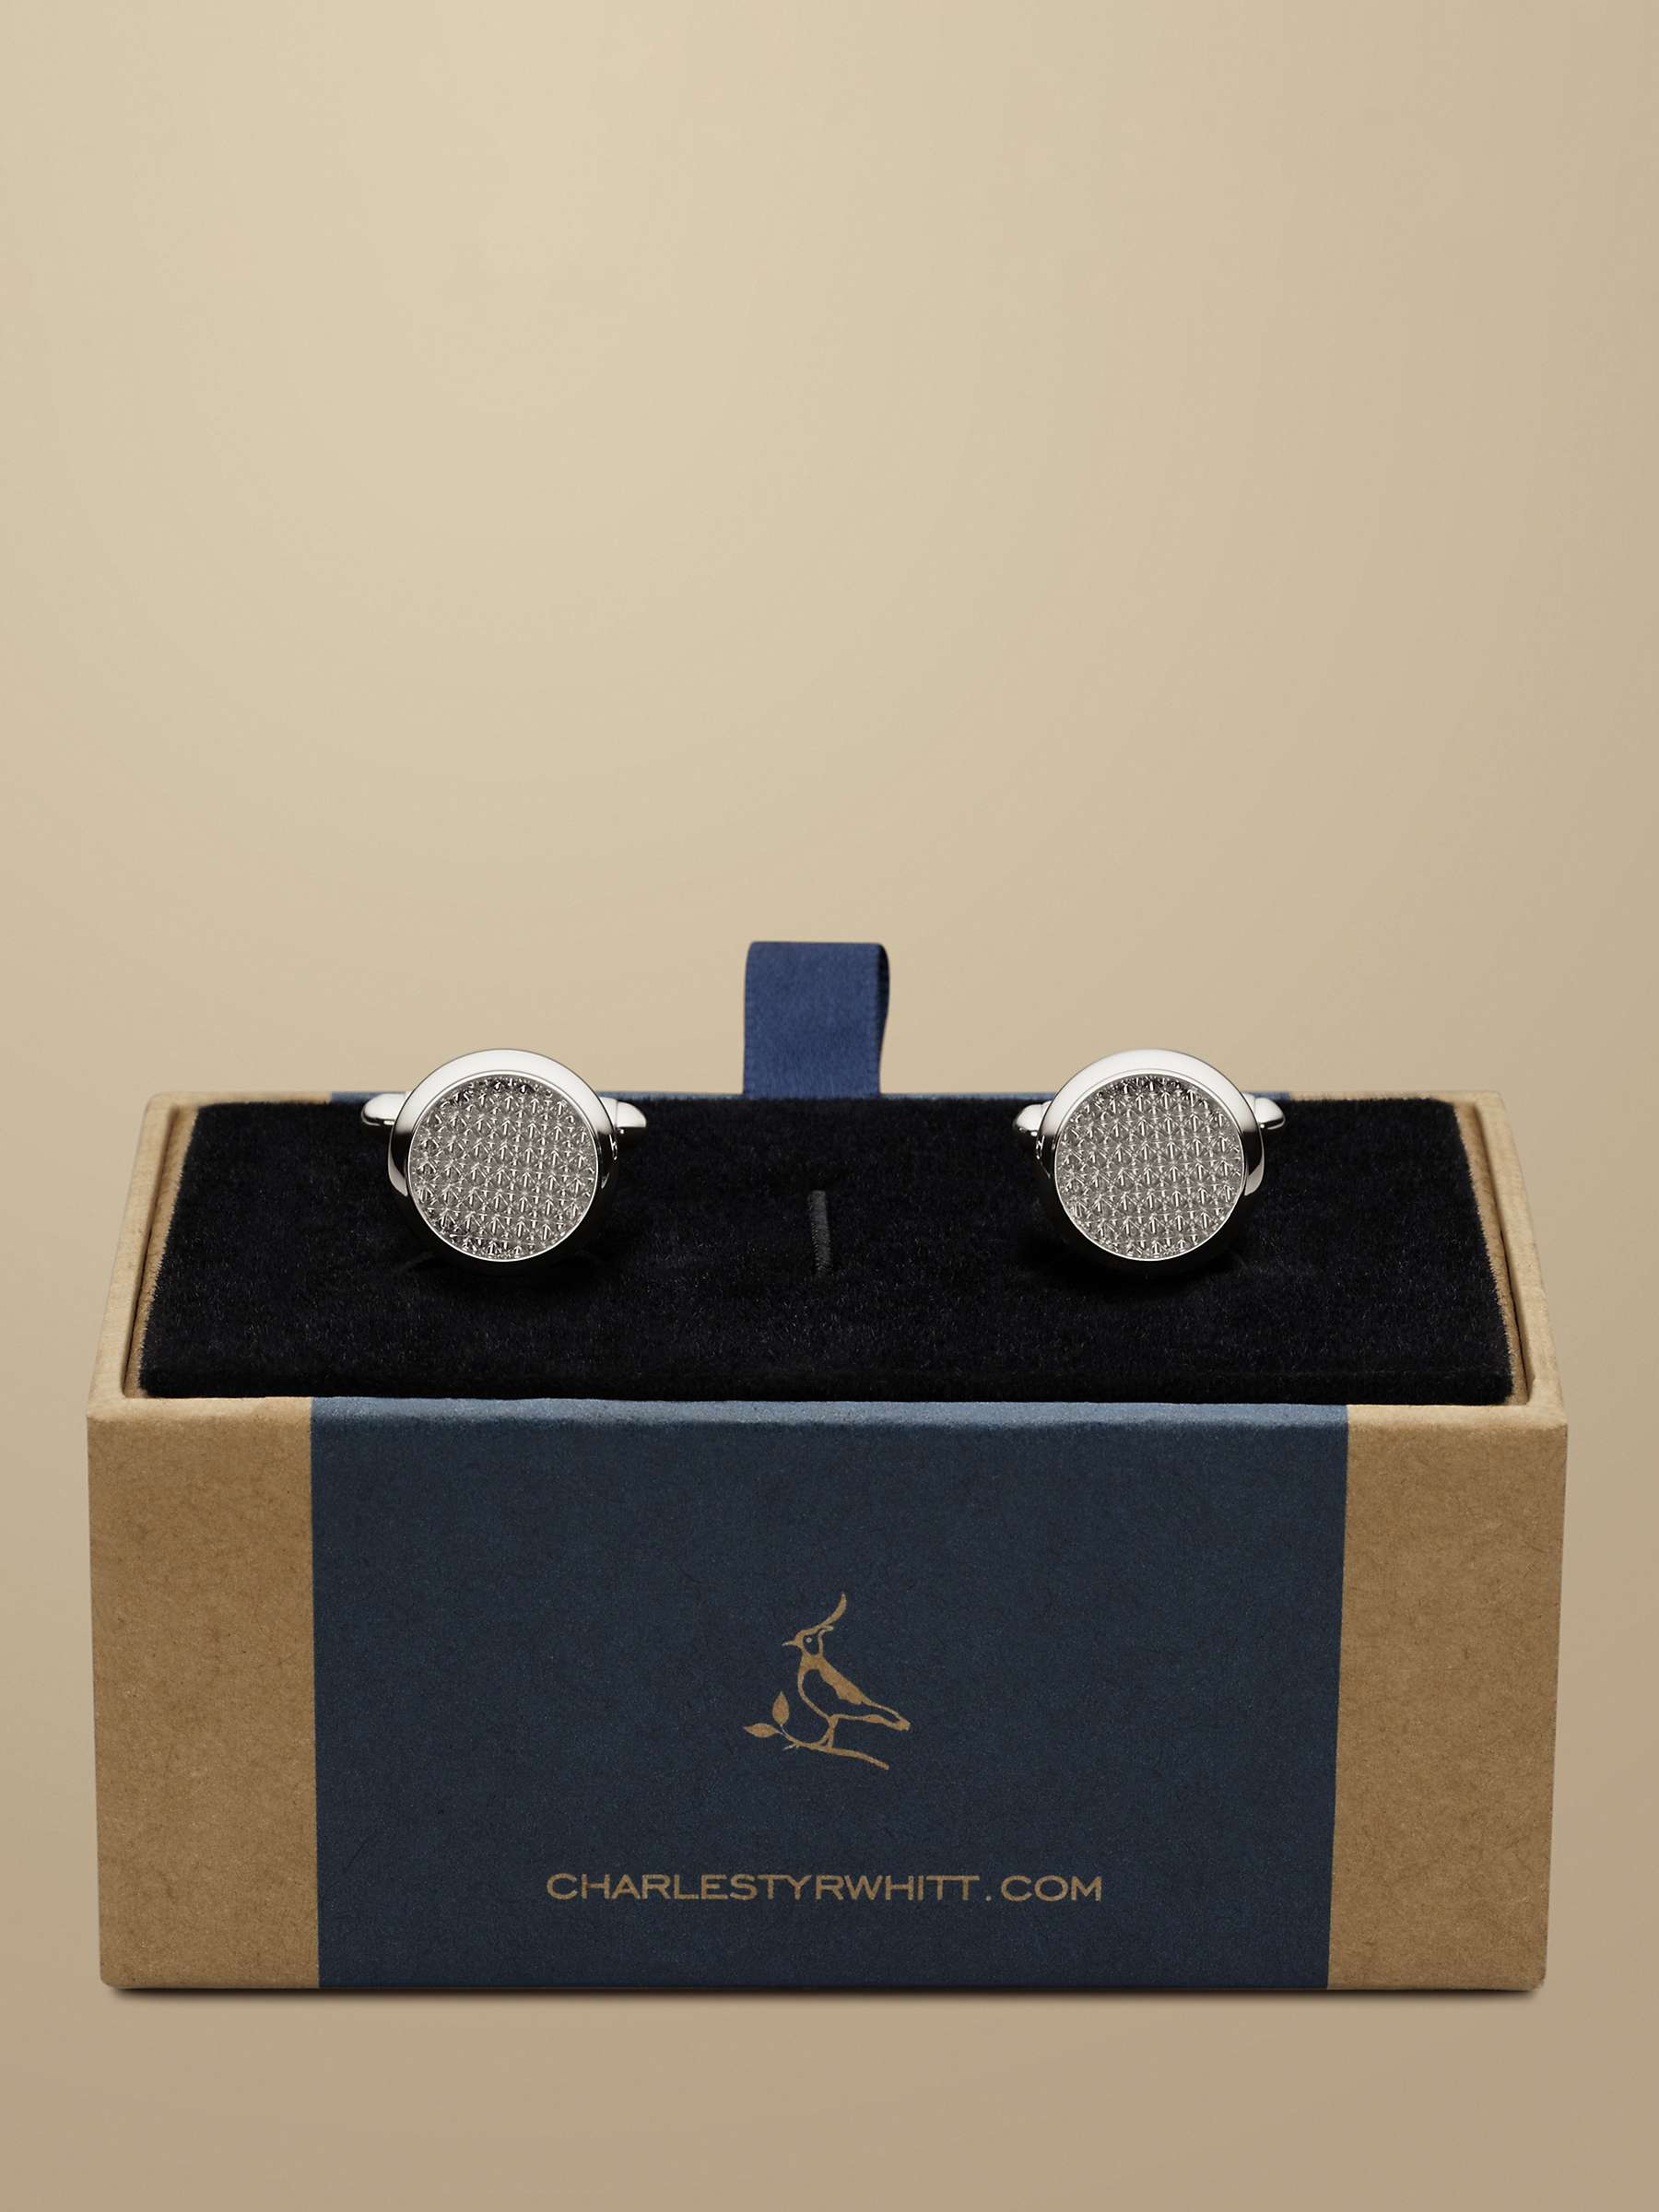 Buy Charles Tyrwhitt Enamel Cufflinks, Silver Online at johnlewis.com